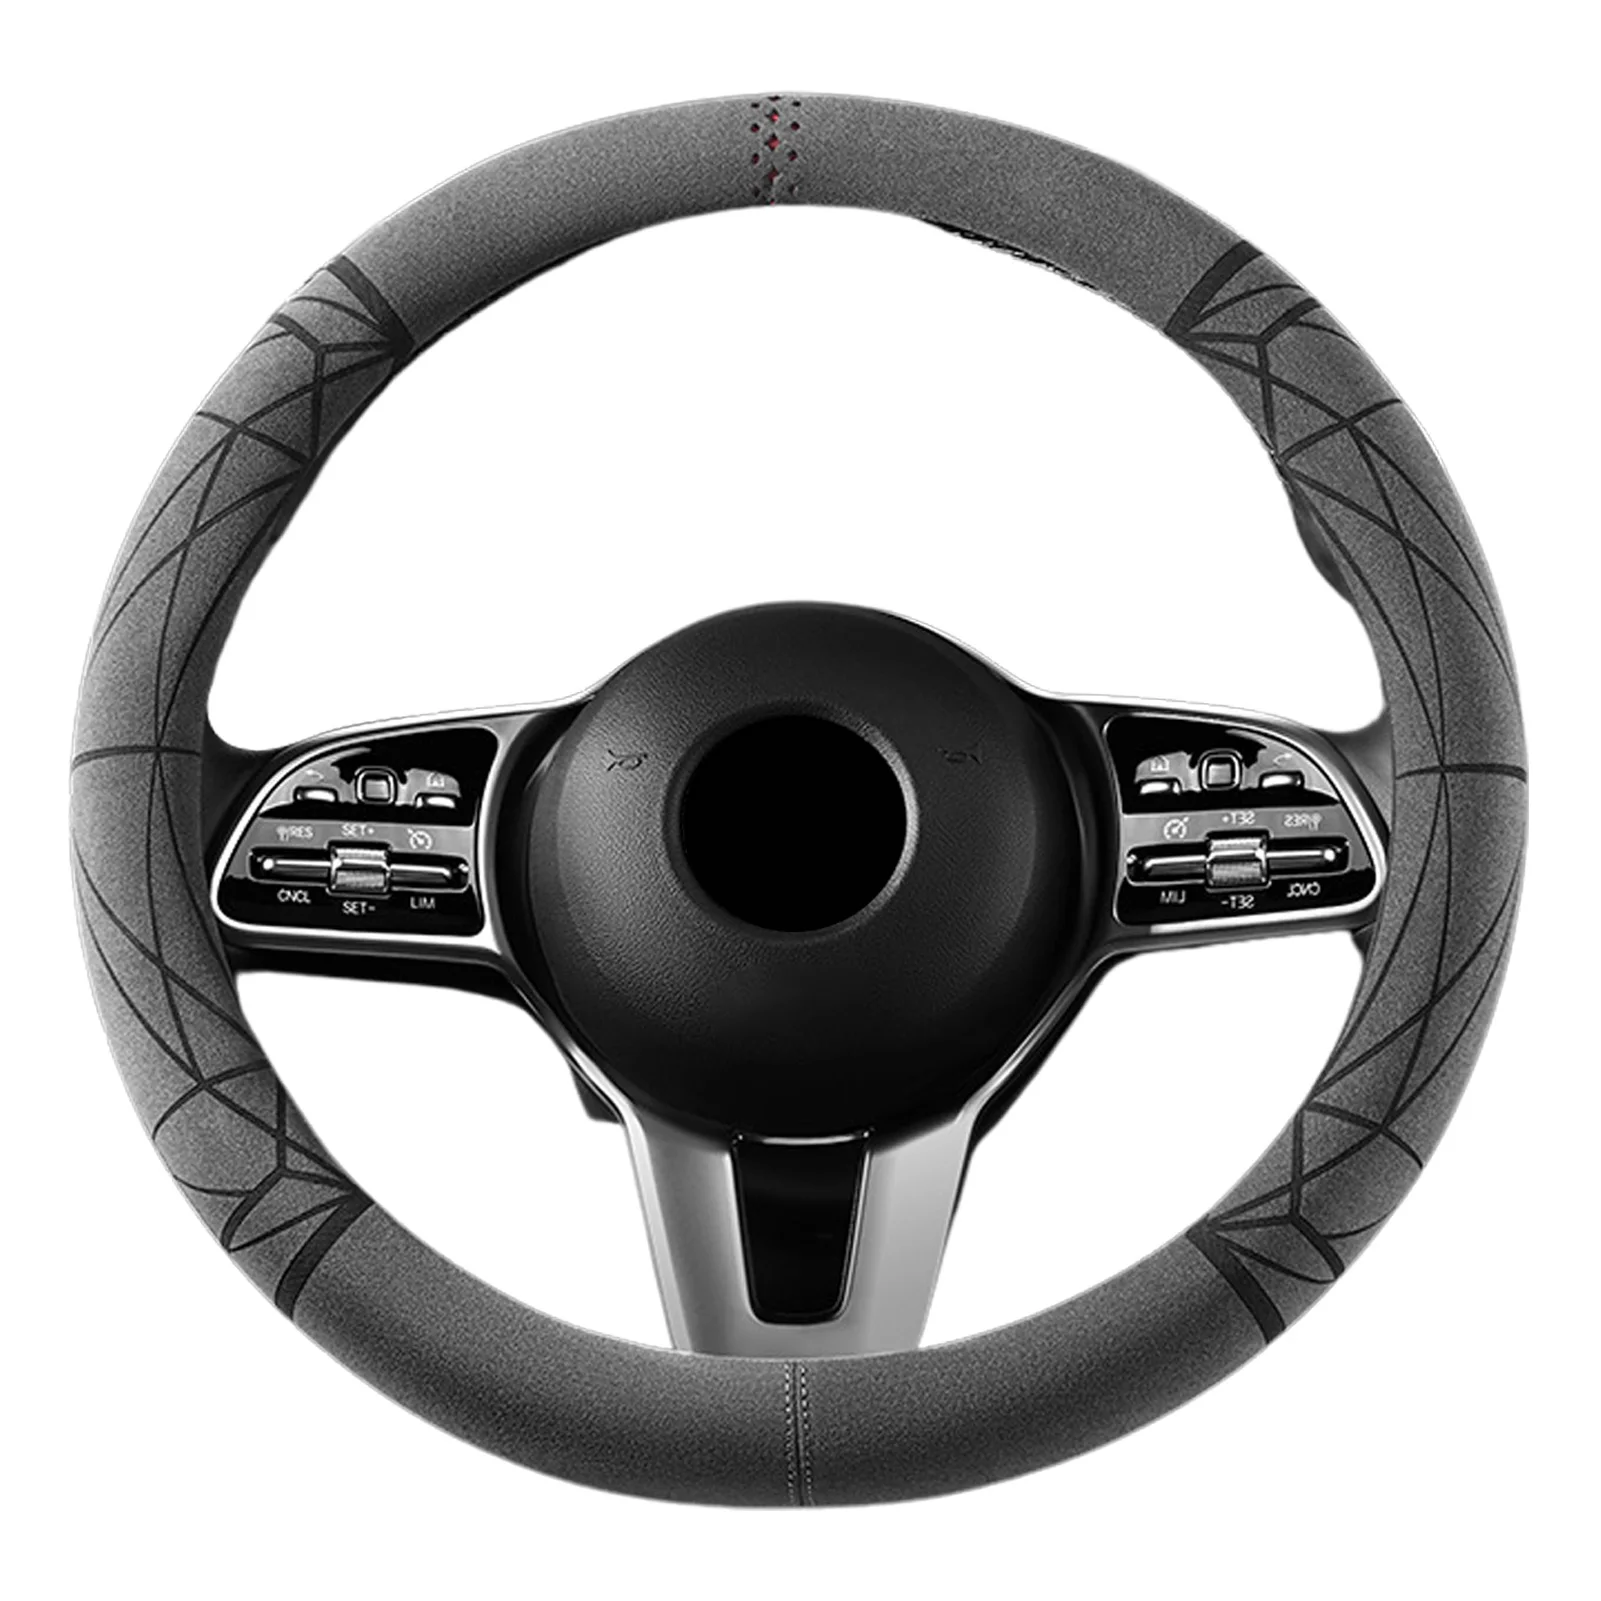 

Car Steering Wheel Cover Universal Auto Steering Wheel Protector Universal Outer Diameter Size 14.5-15in/37-38cm Anti-slip